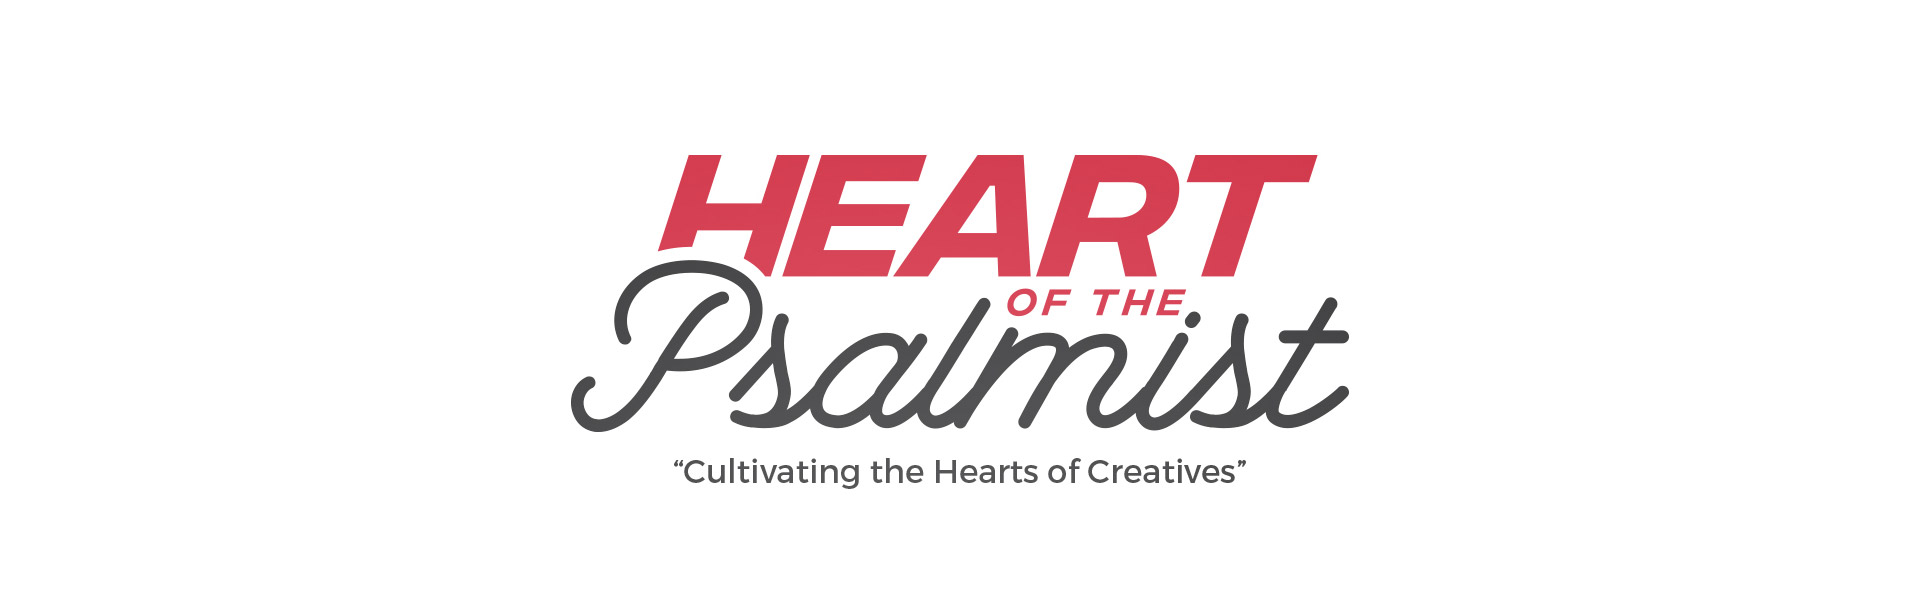 Heart of the Psalmist podcast